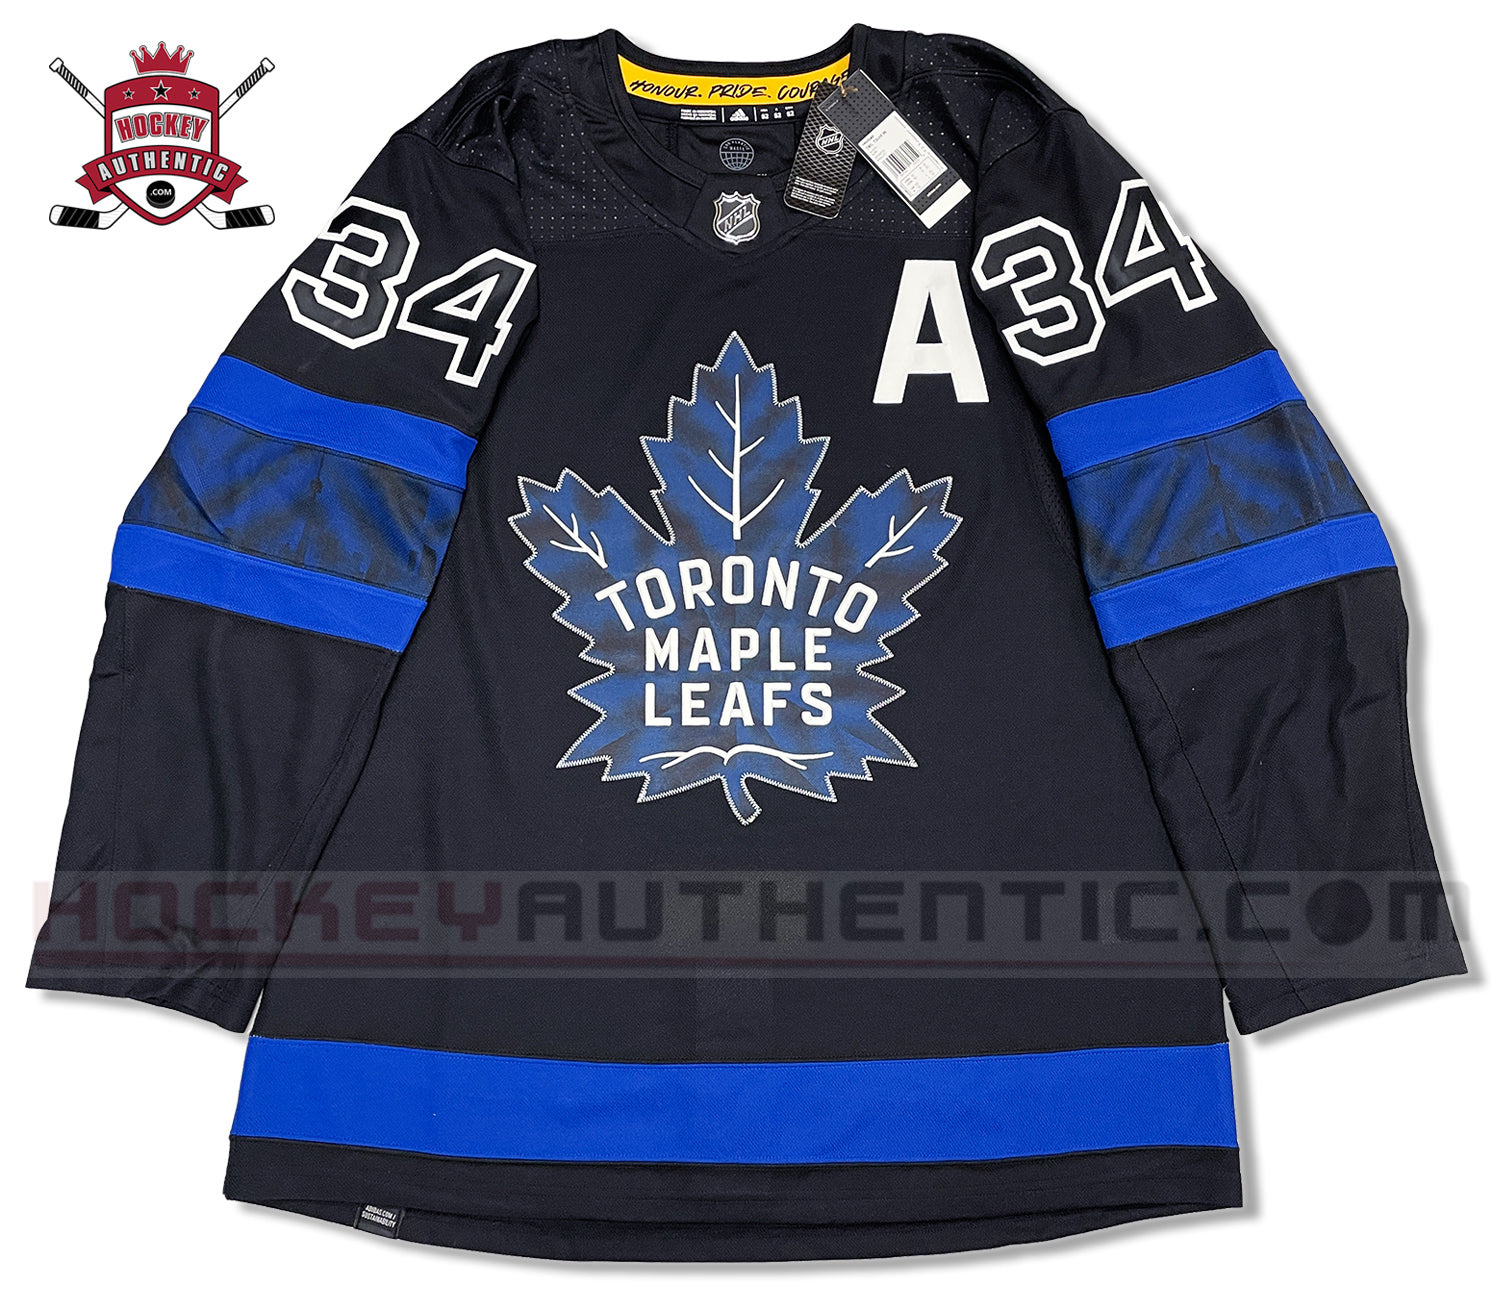 NHL Toronto Maple Leafs Black Alternate Jersey